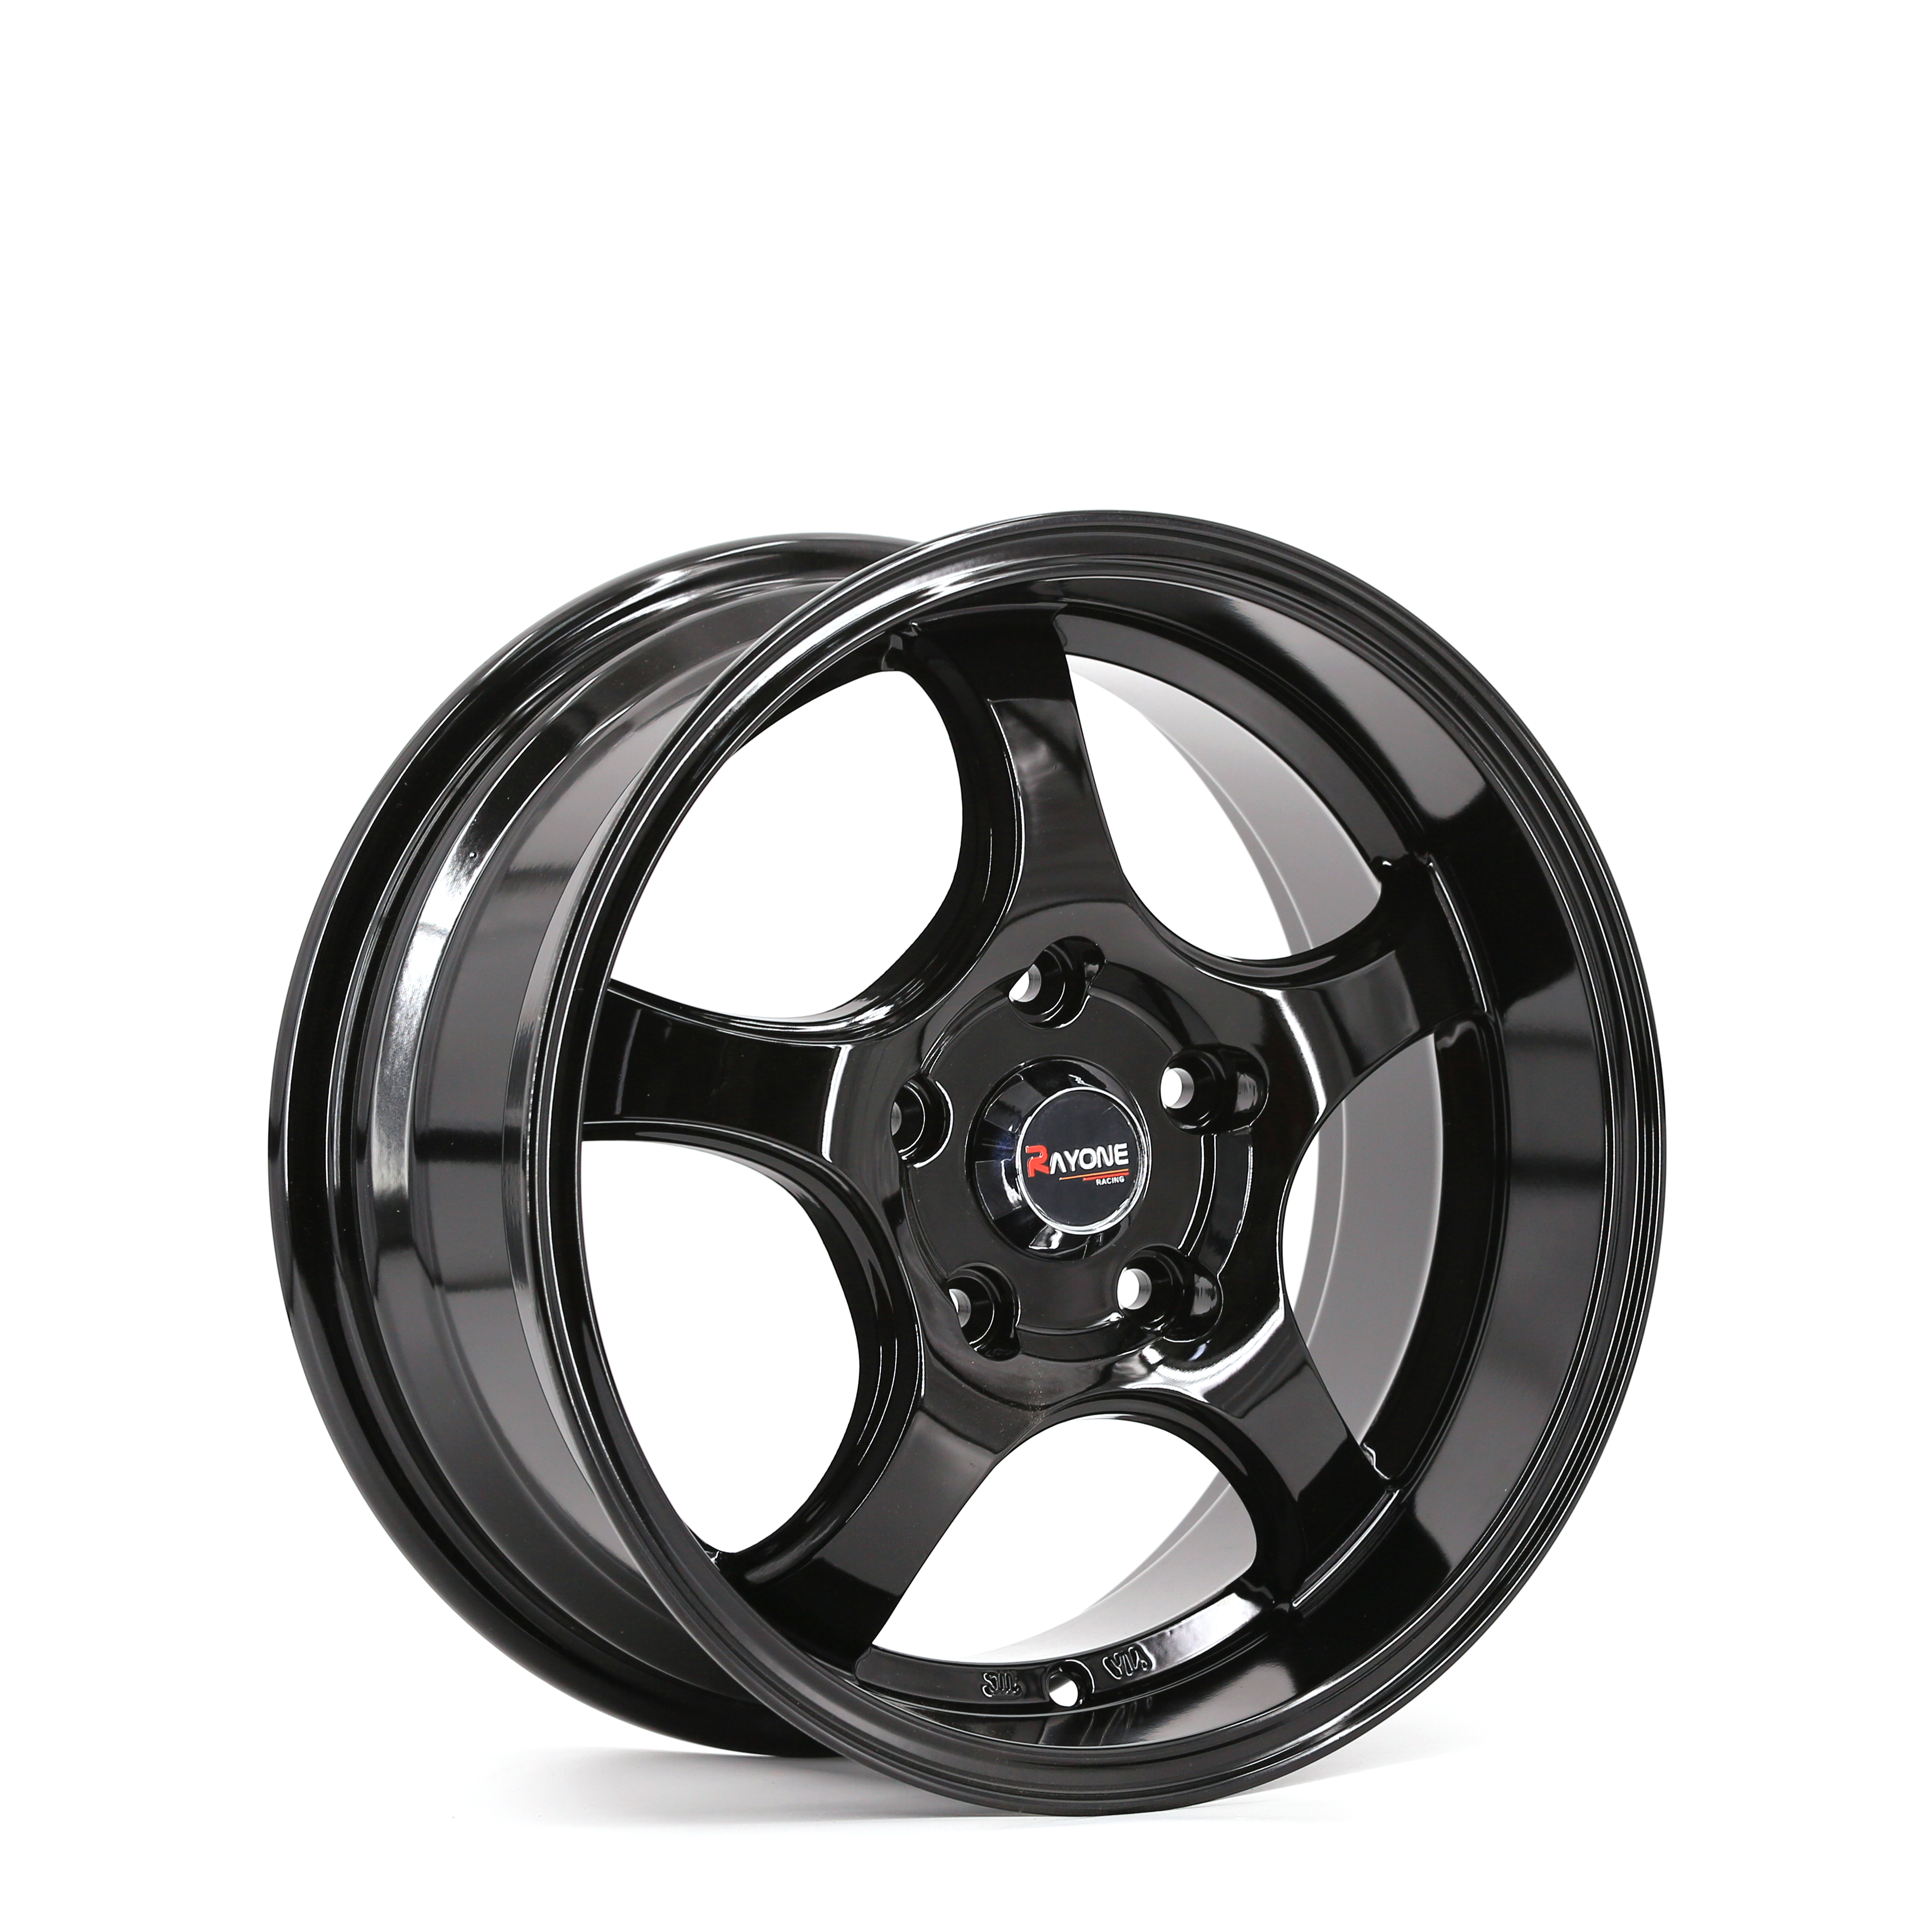 Rayone Five-Spoke Wheel Design 625 Matt Black 15inch 16inch Car Alloy Wheels